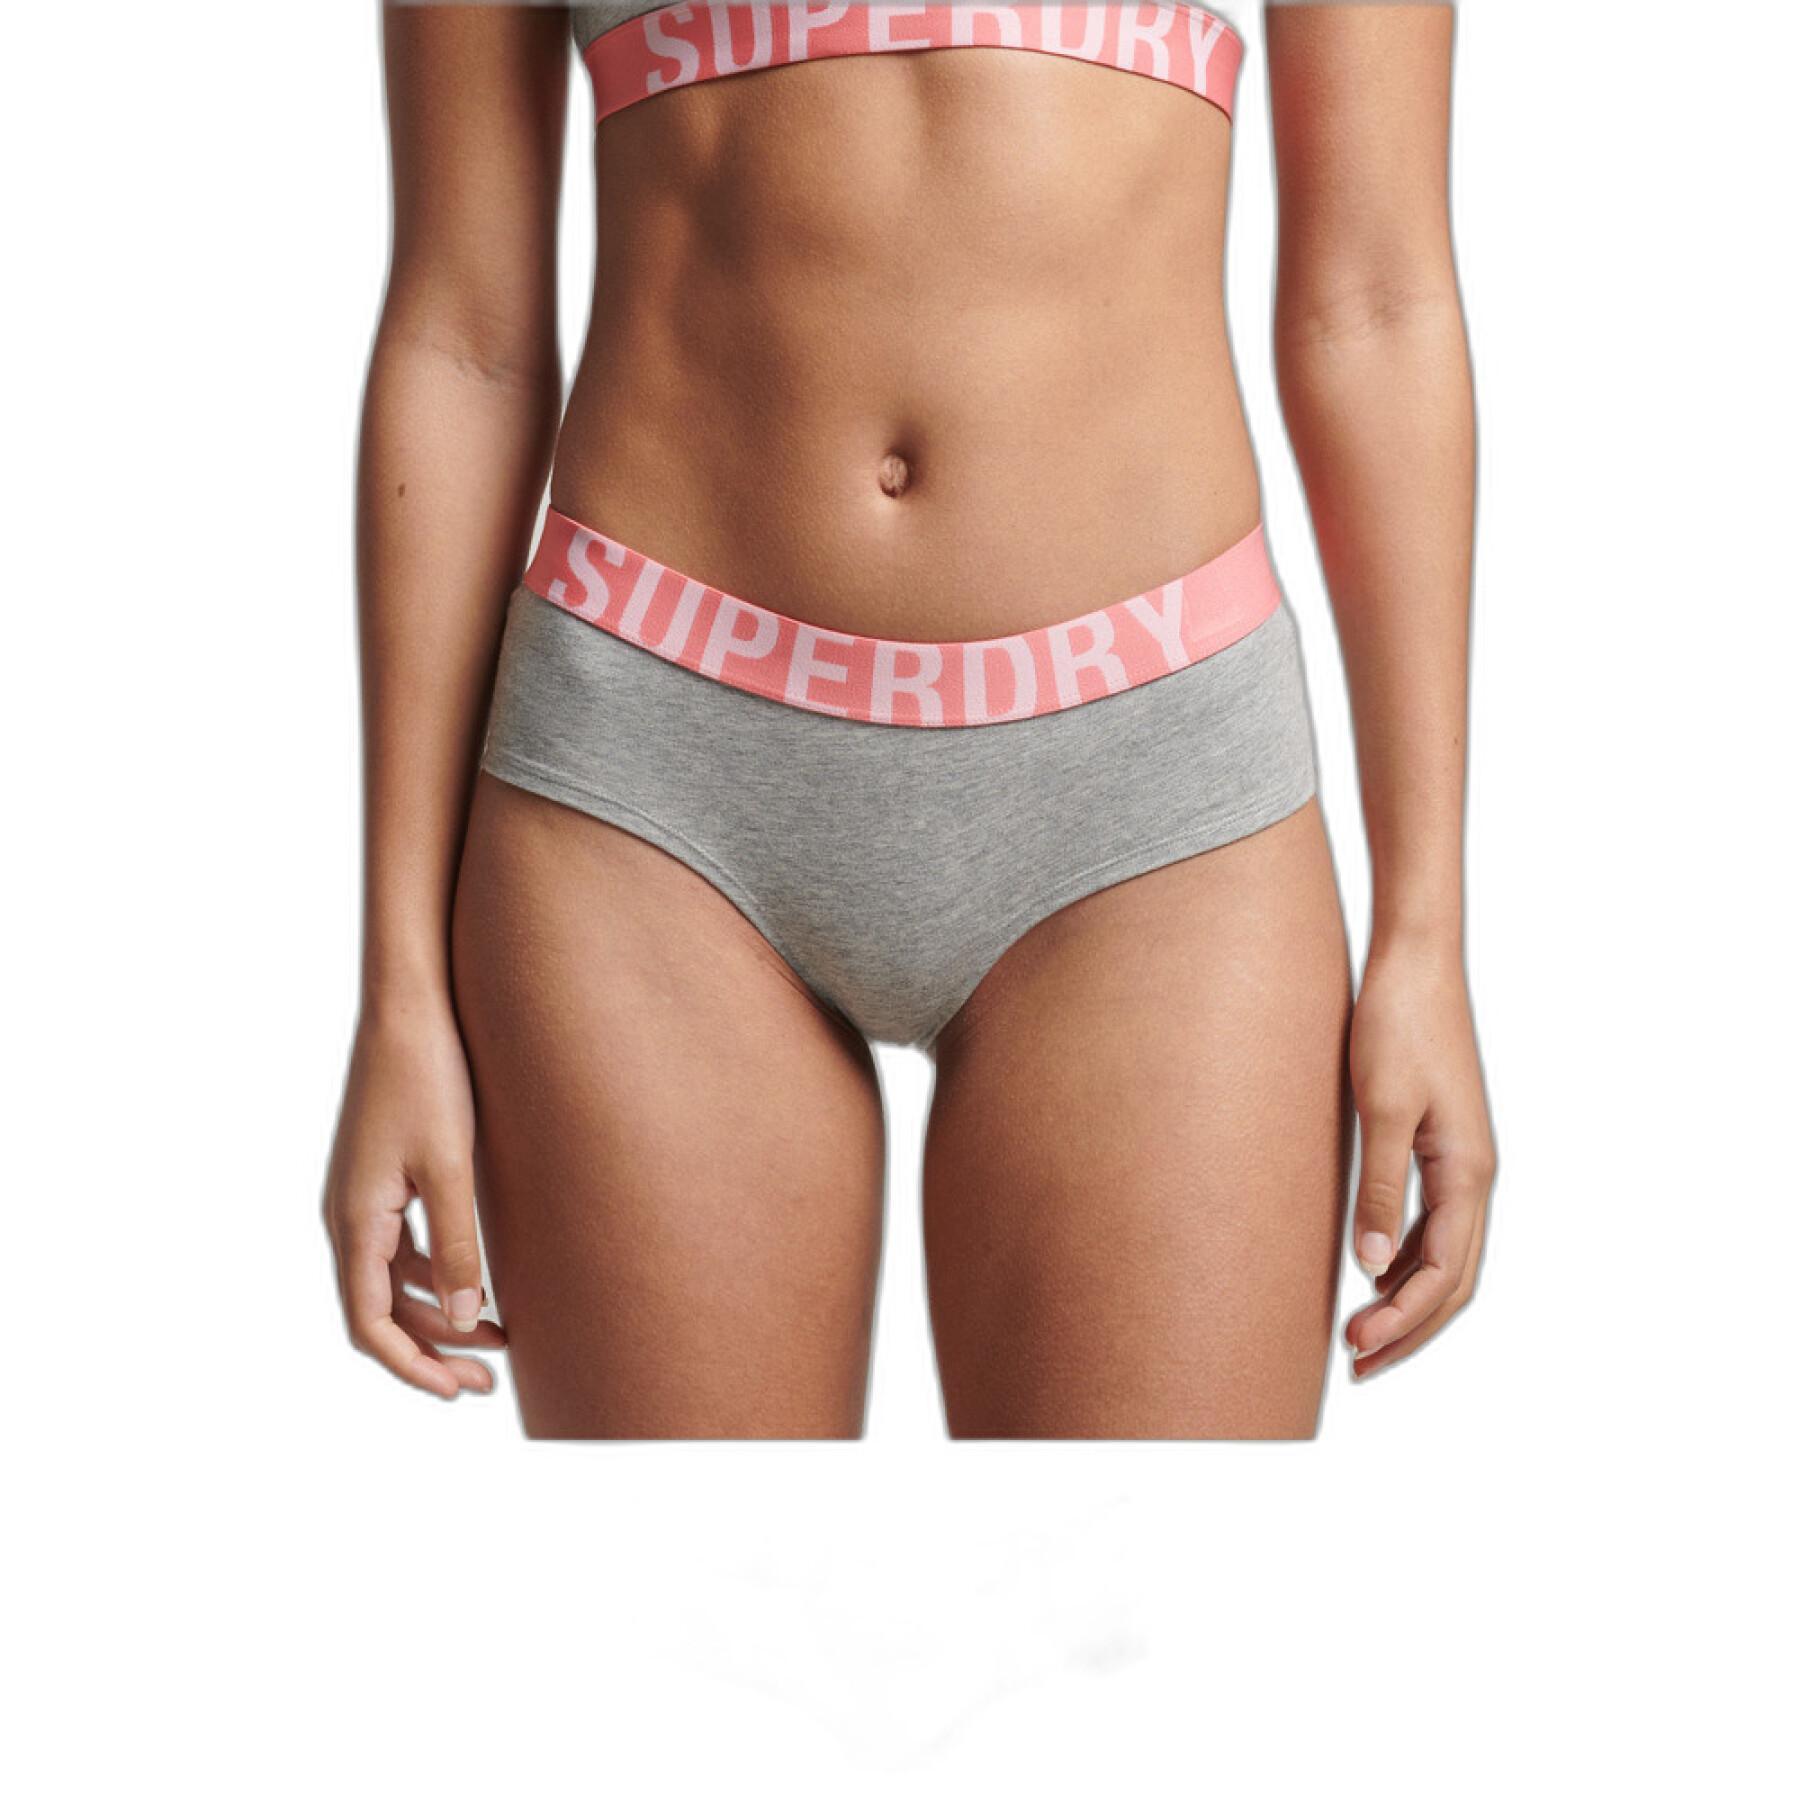 Vrouwen ondergoed met laag taille logo Superdry